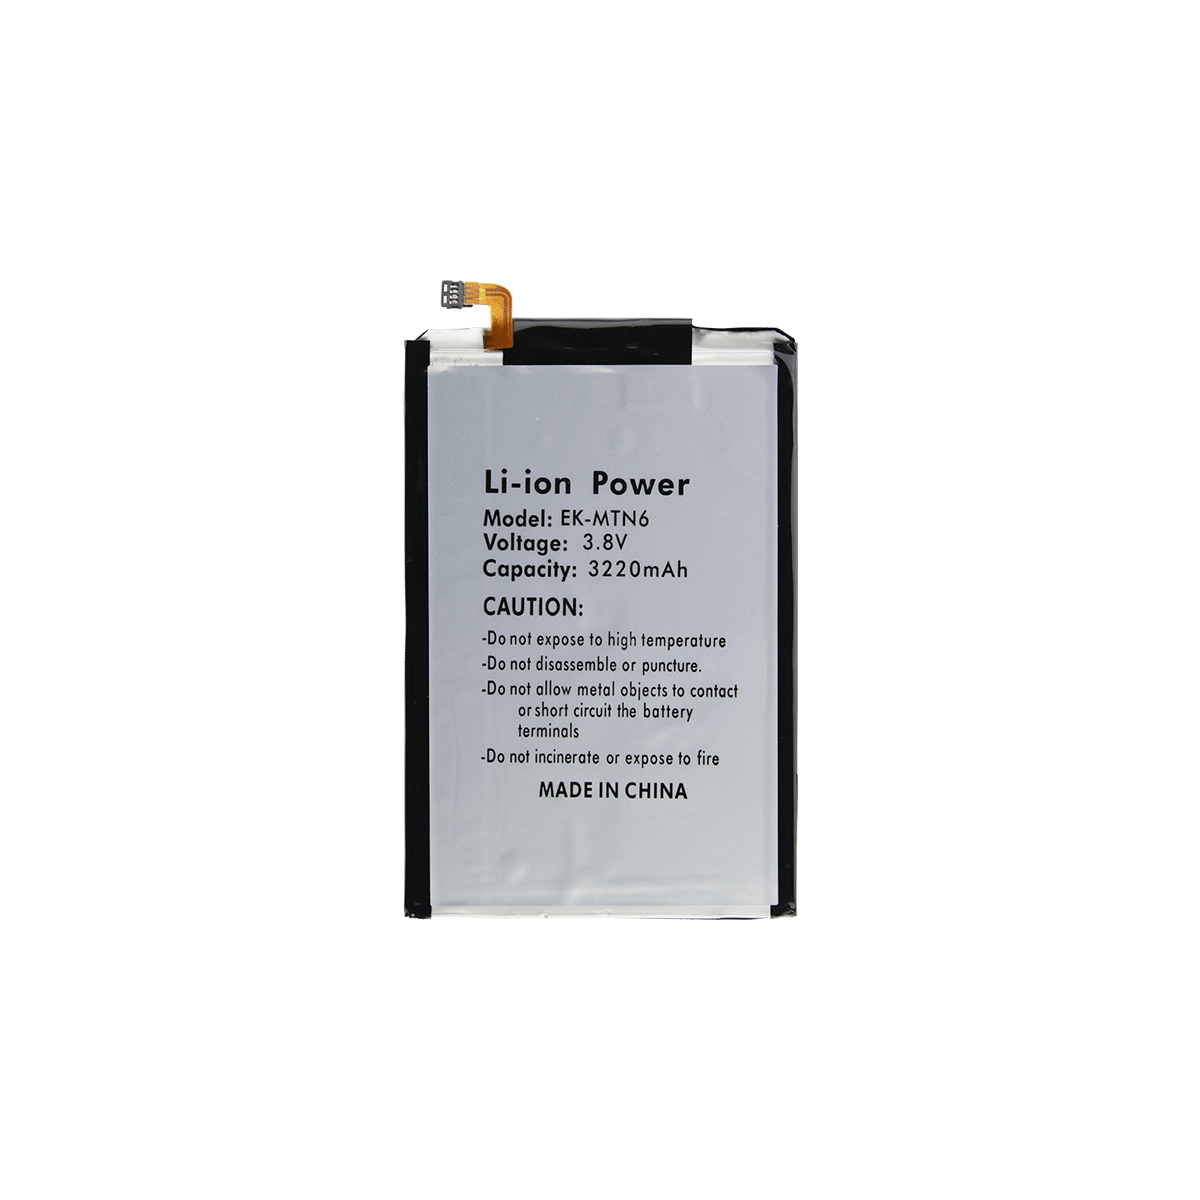 Motorola Nexus 6 Battery Replacement